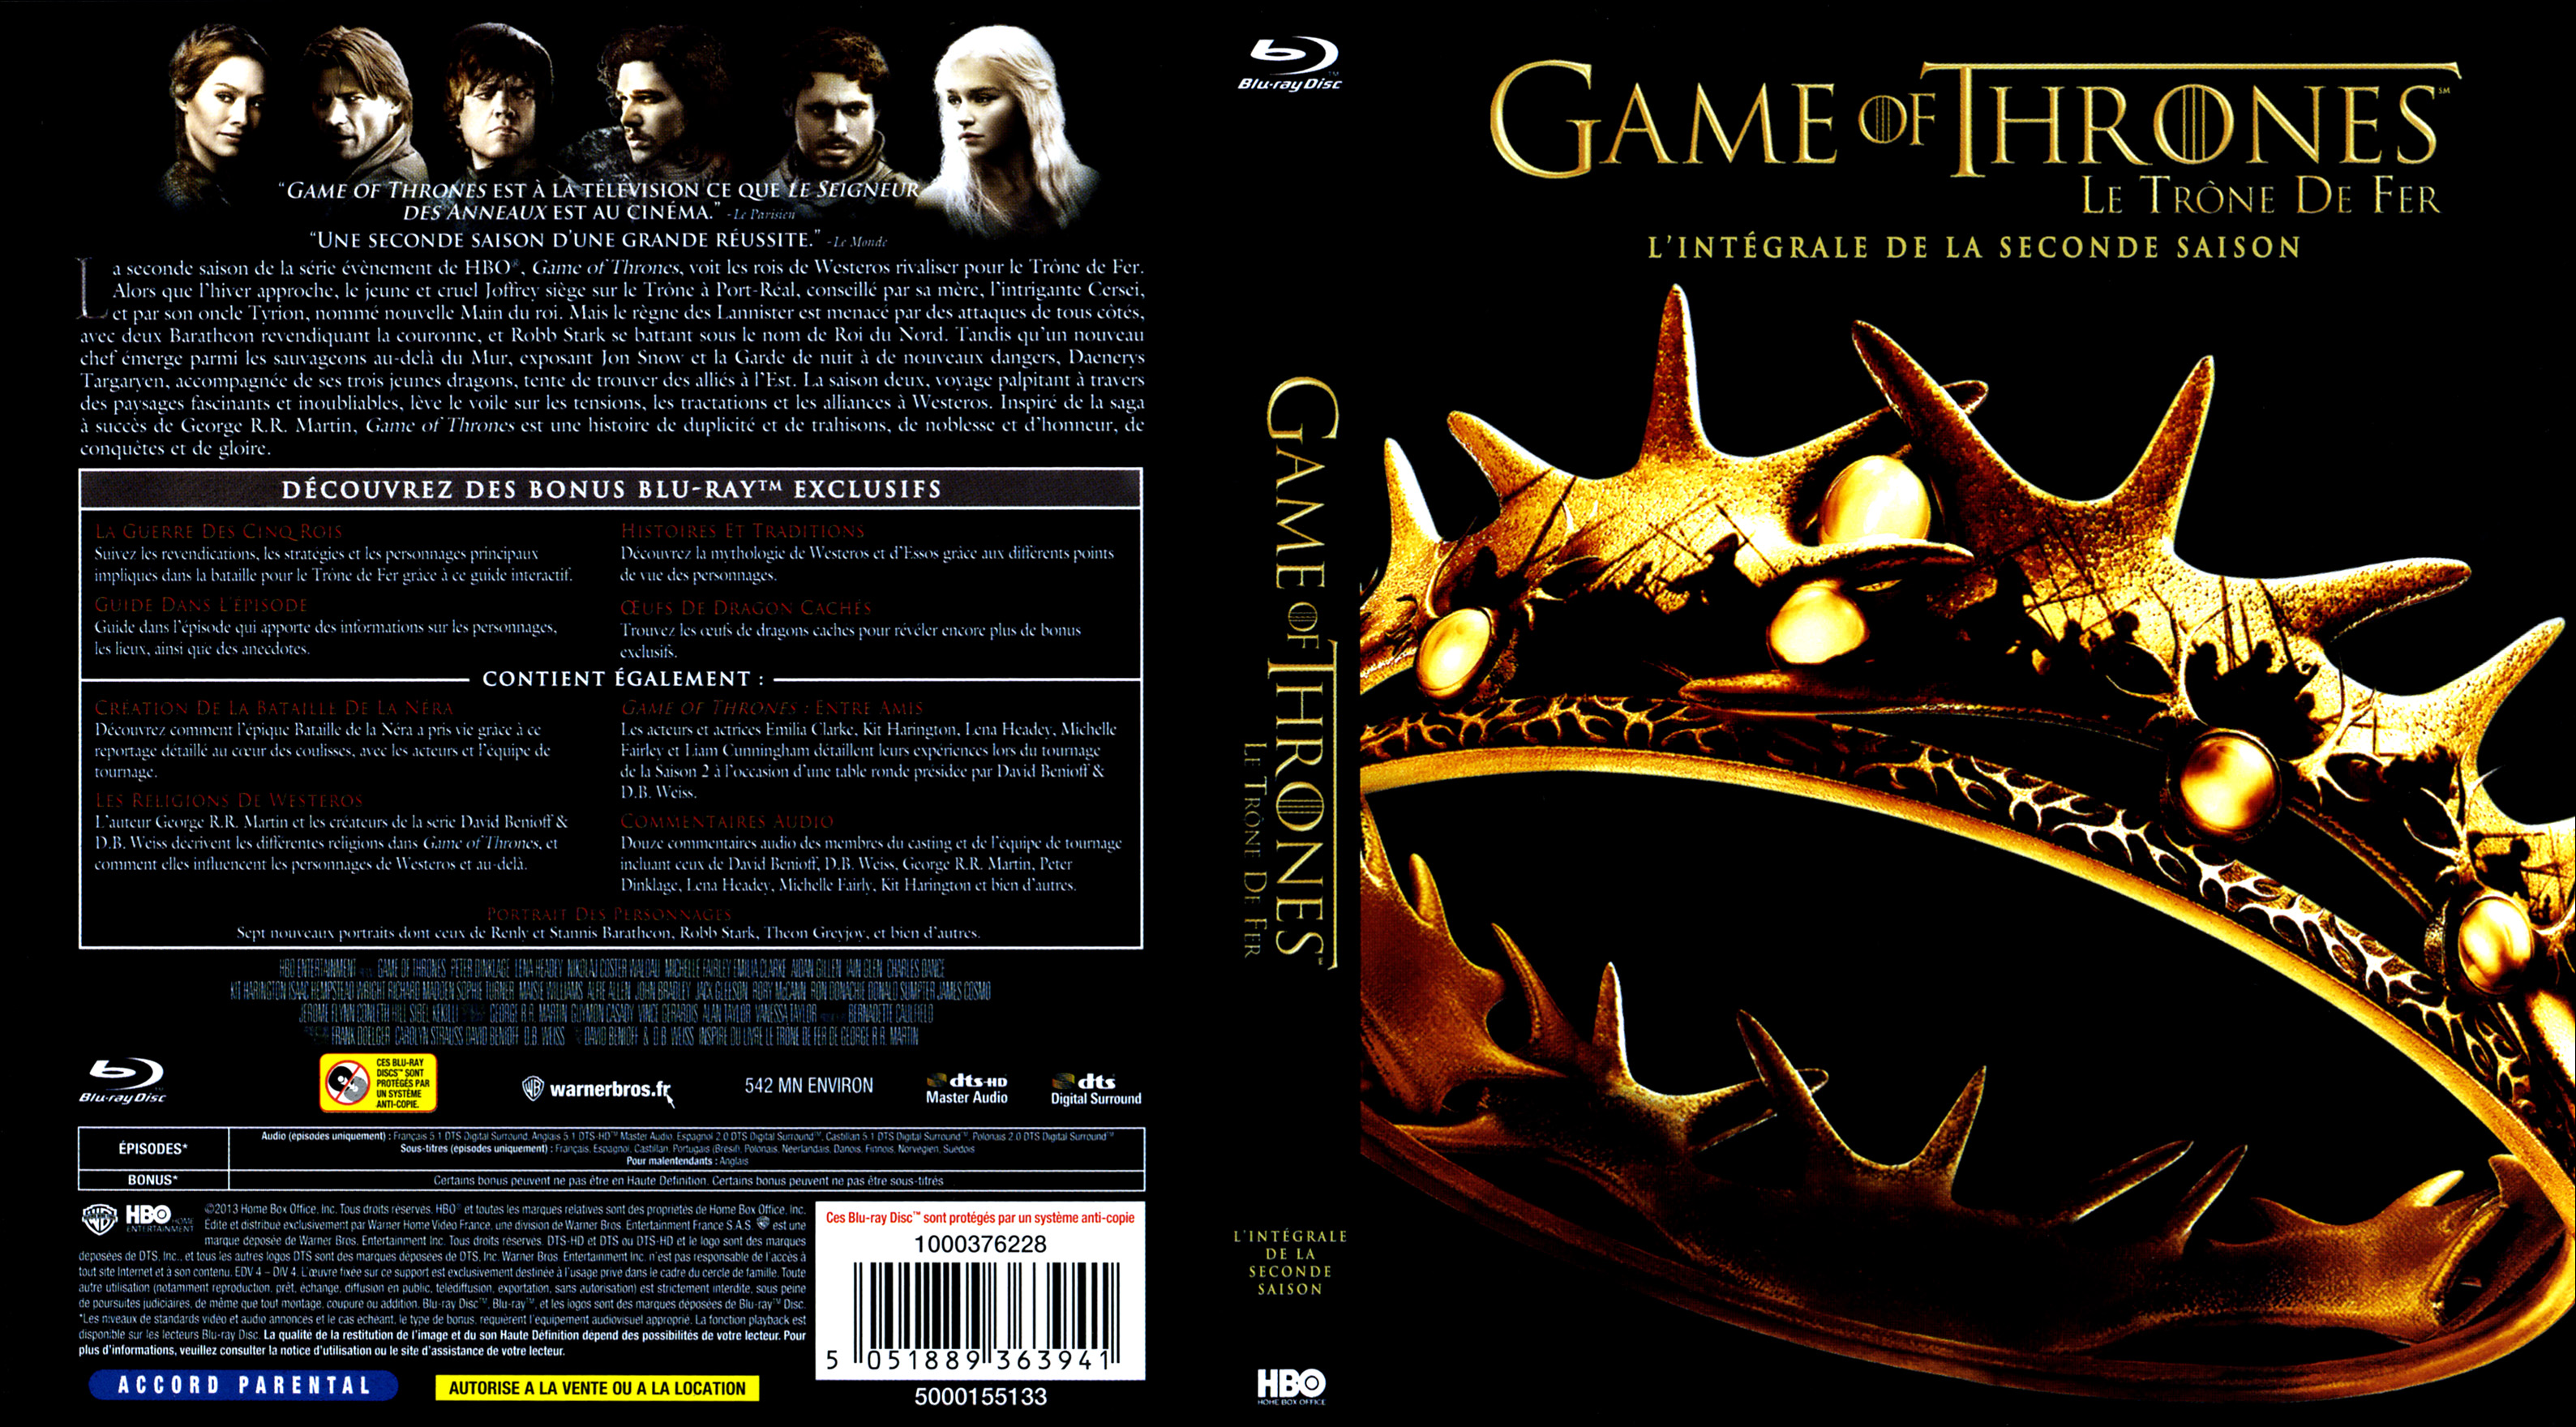 Jaquette DVD Game of thrones (le trone de fer) Saison 2 (BLU-RAY)